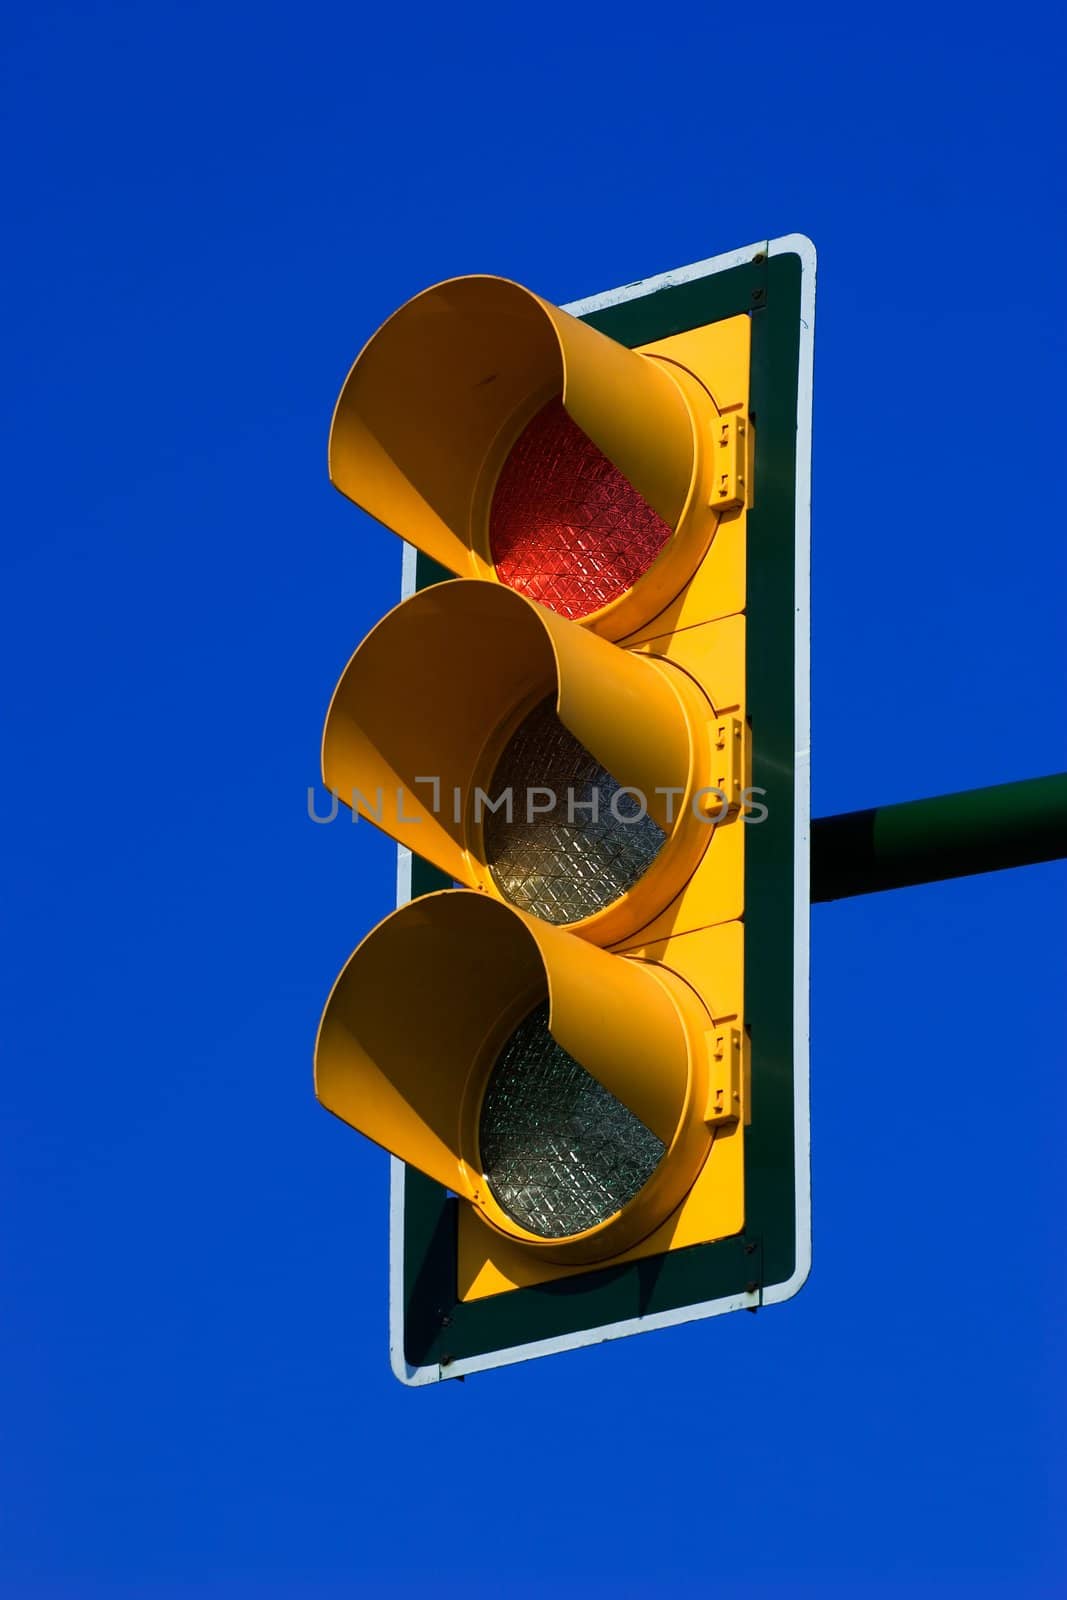 Red stop traffic light on blue sky